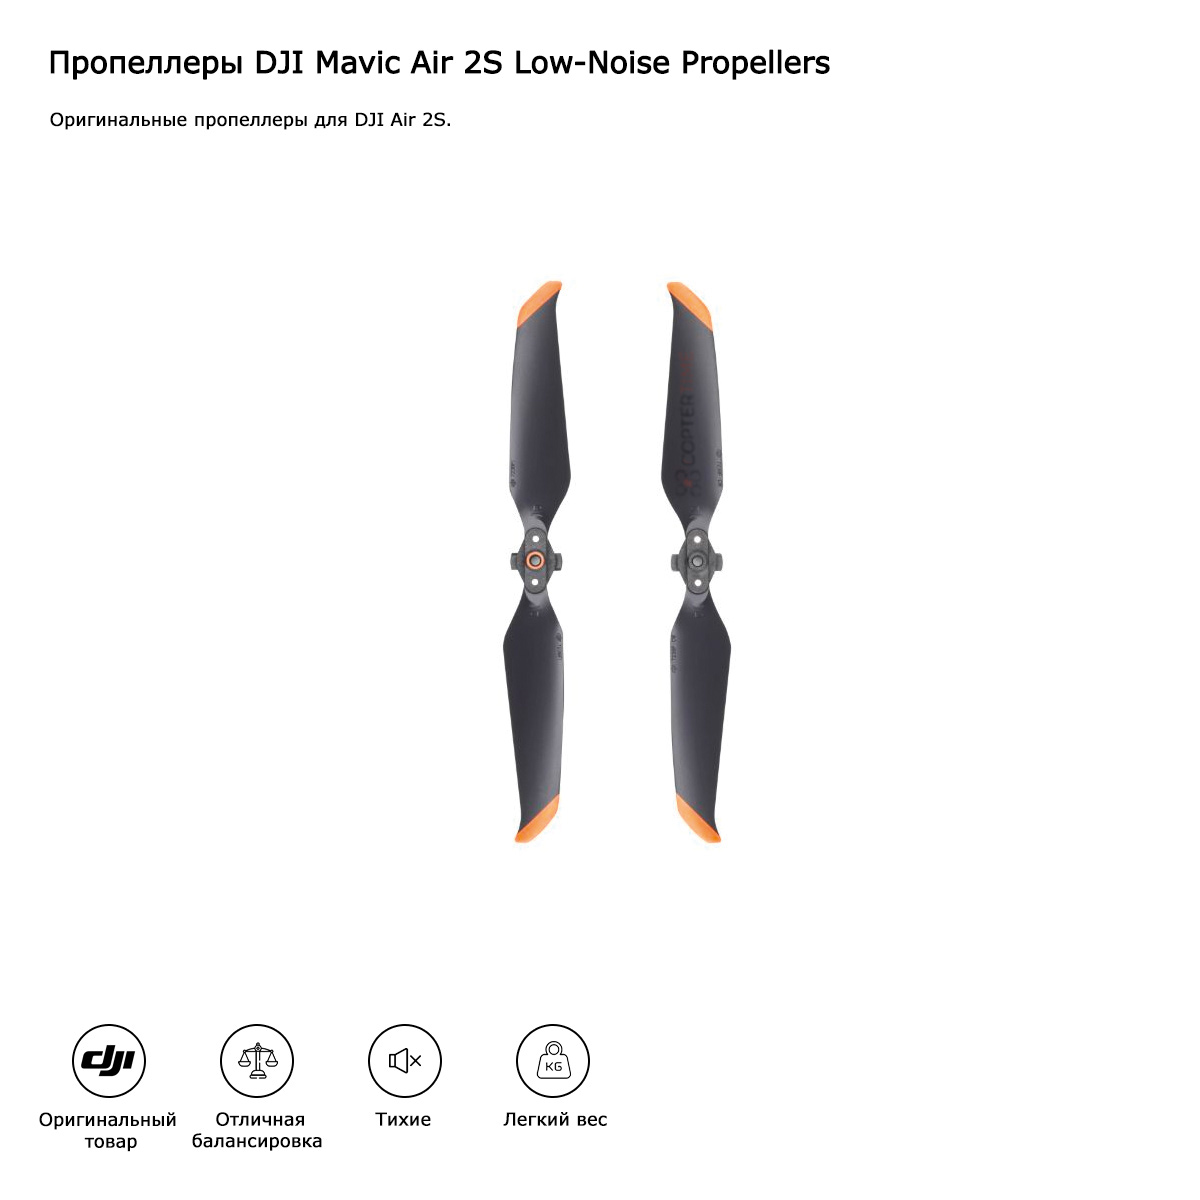 Пропеллеры DJI Mavic Air 2S Low-Noise Propellers (оригинал)